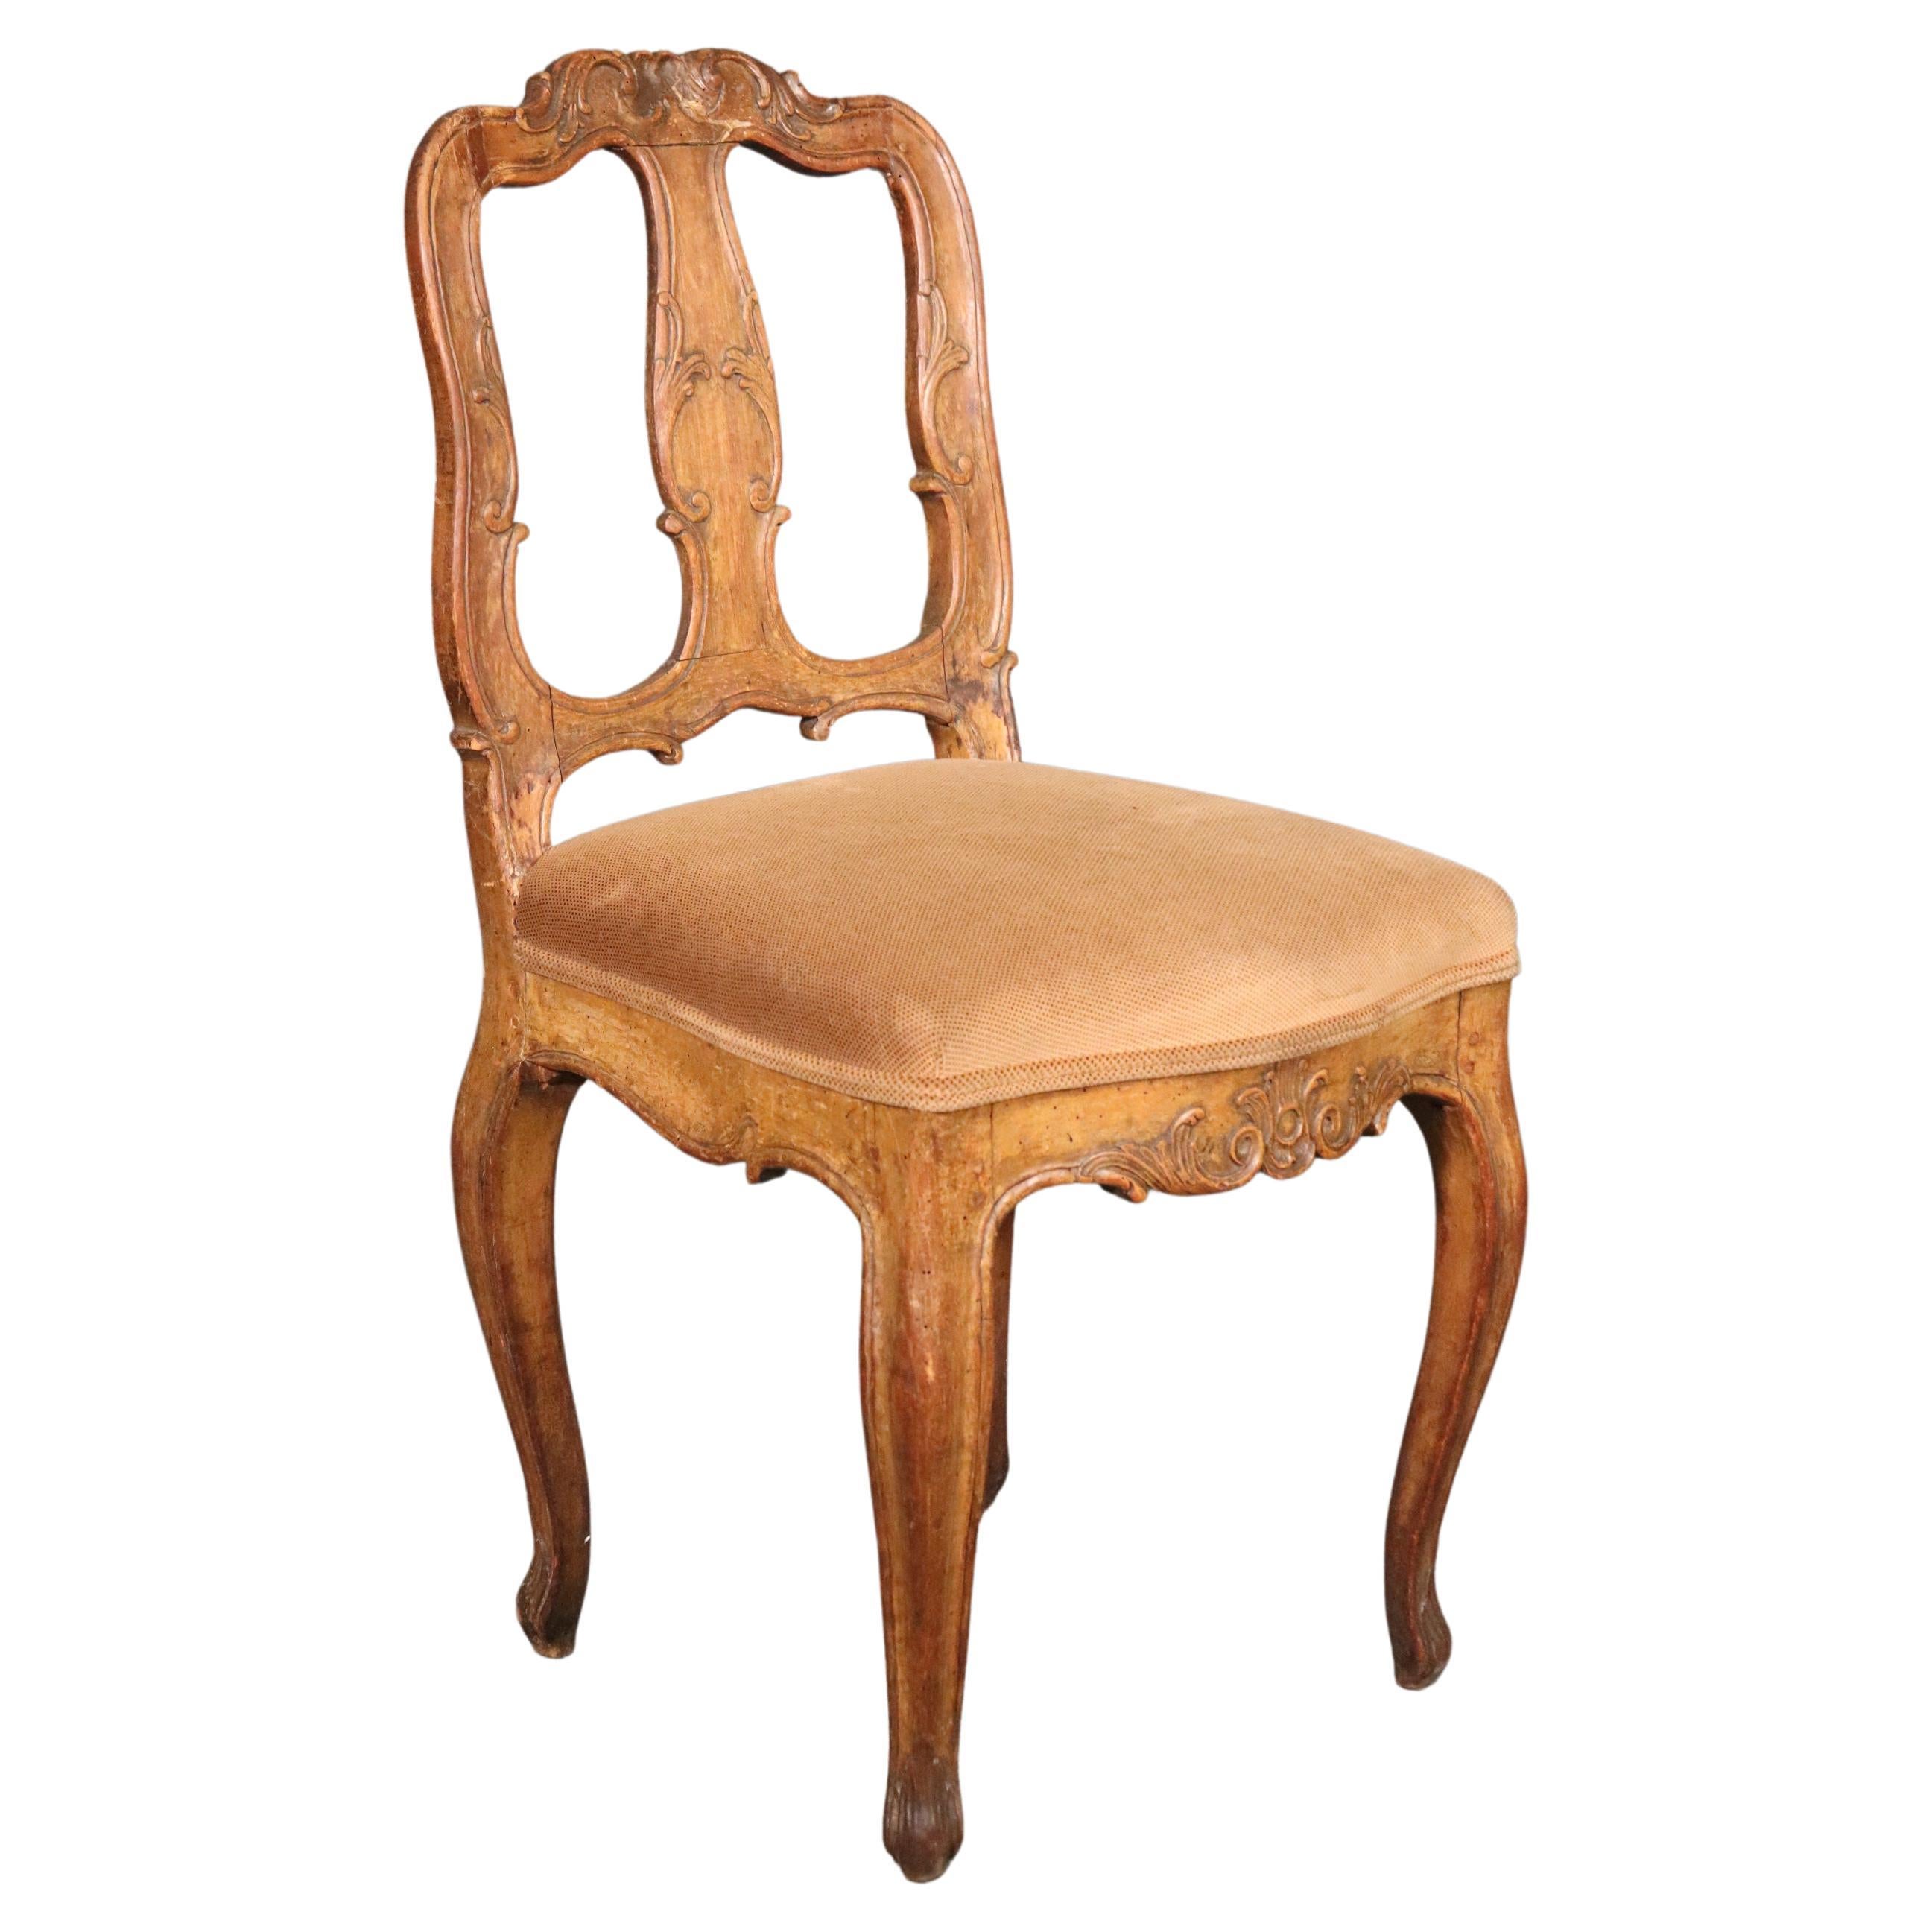 Period 1770s Era Italian Provincial Walnut Desk or Vanity Chair For Sale